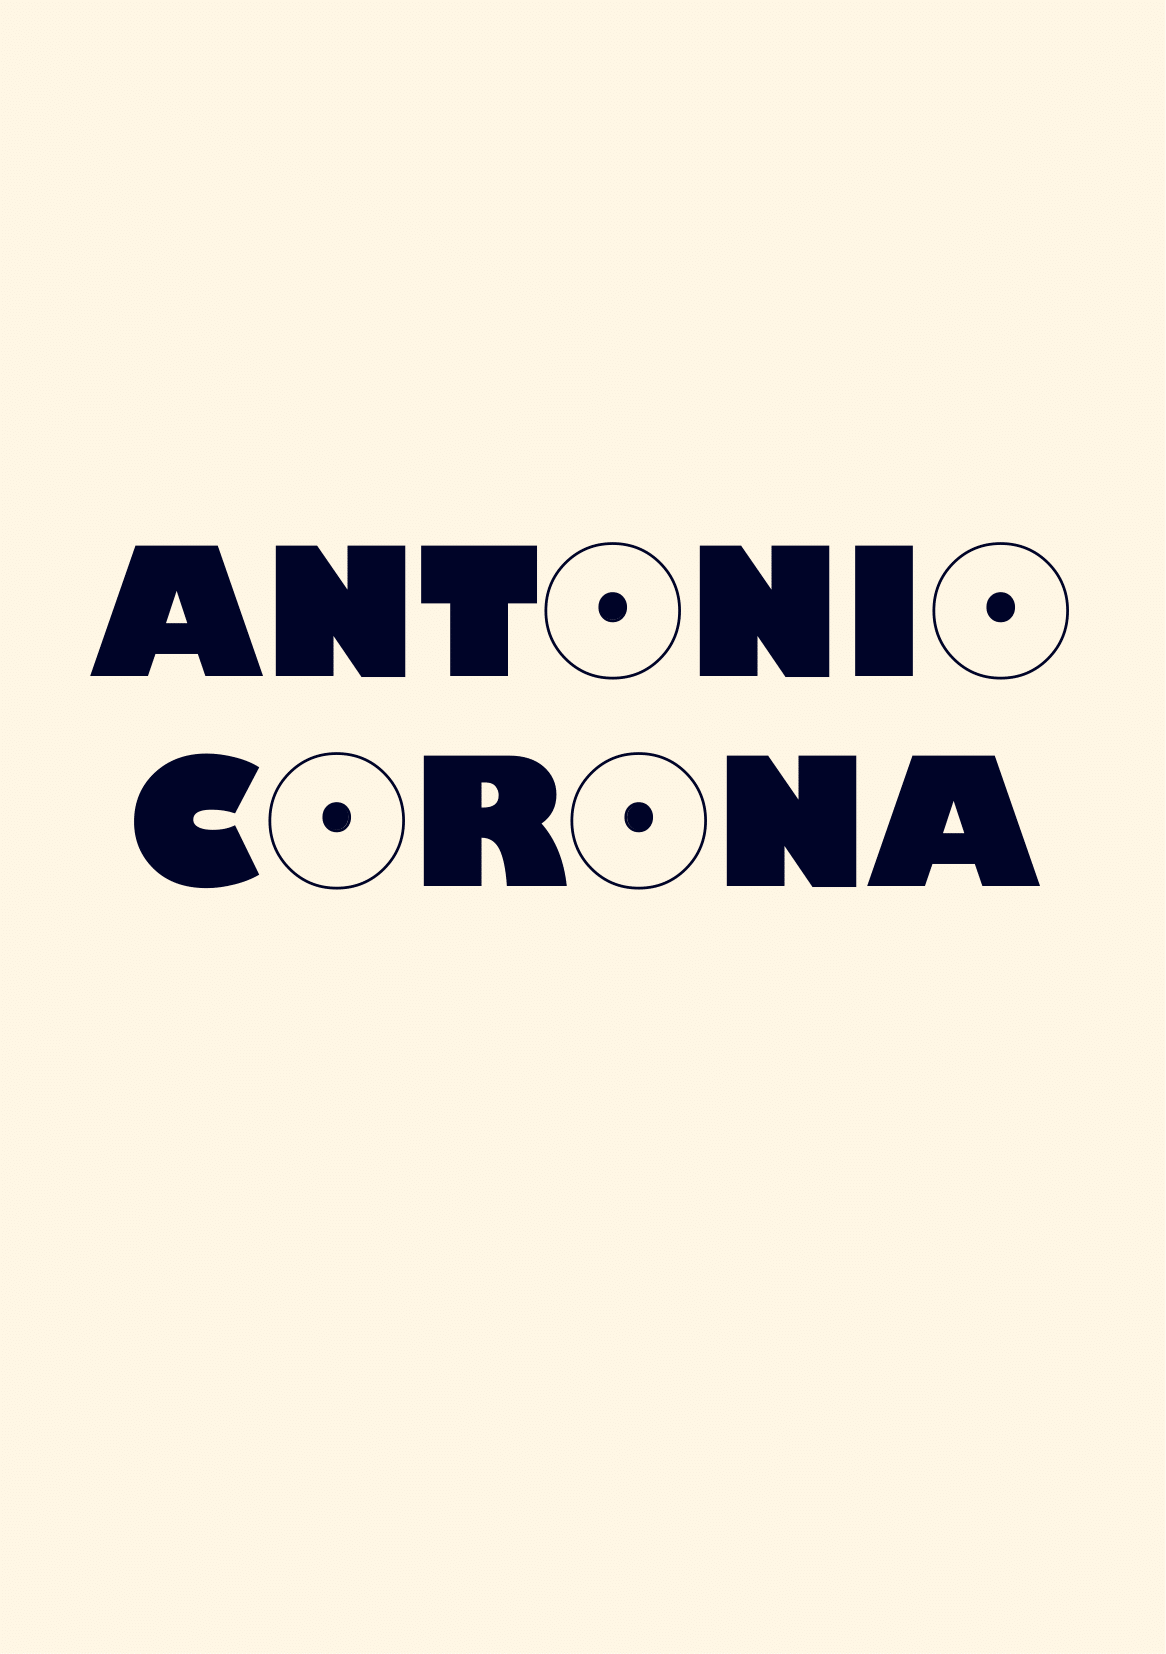 Antonio Corona